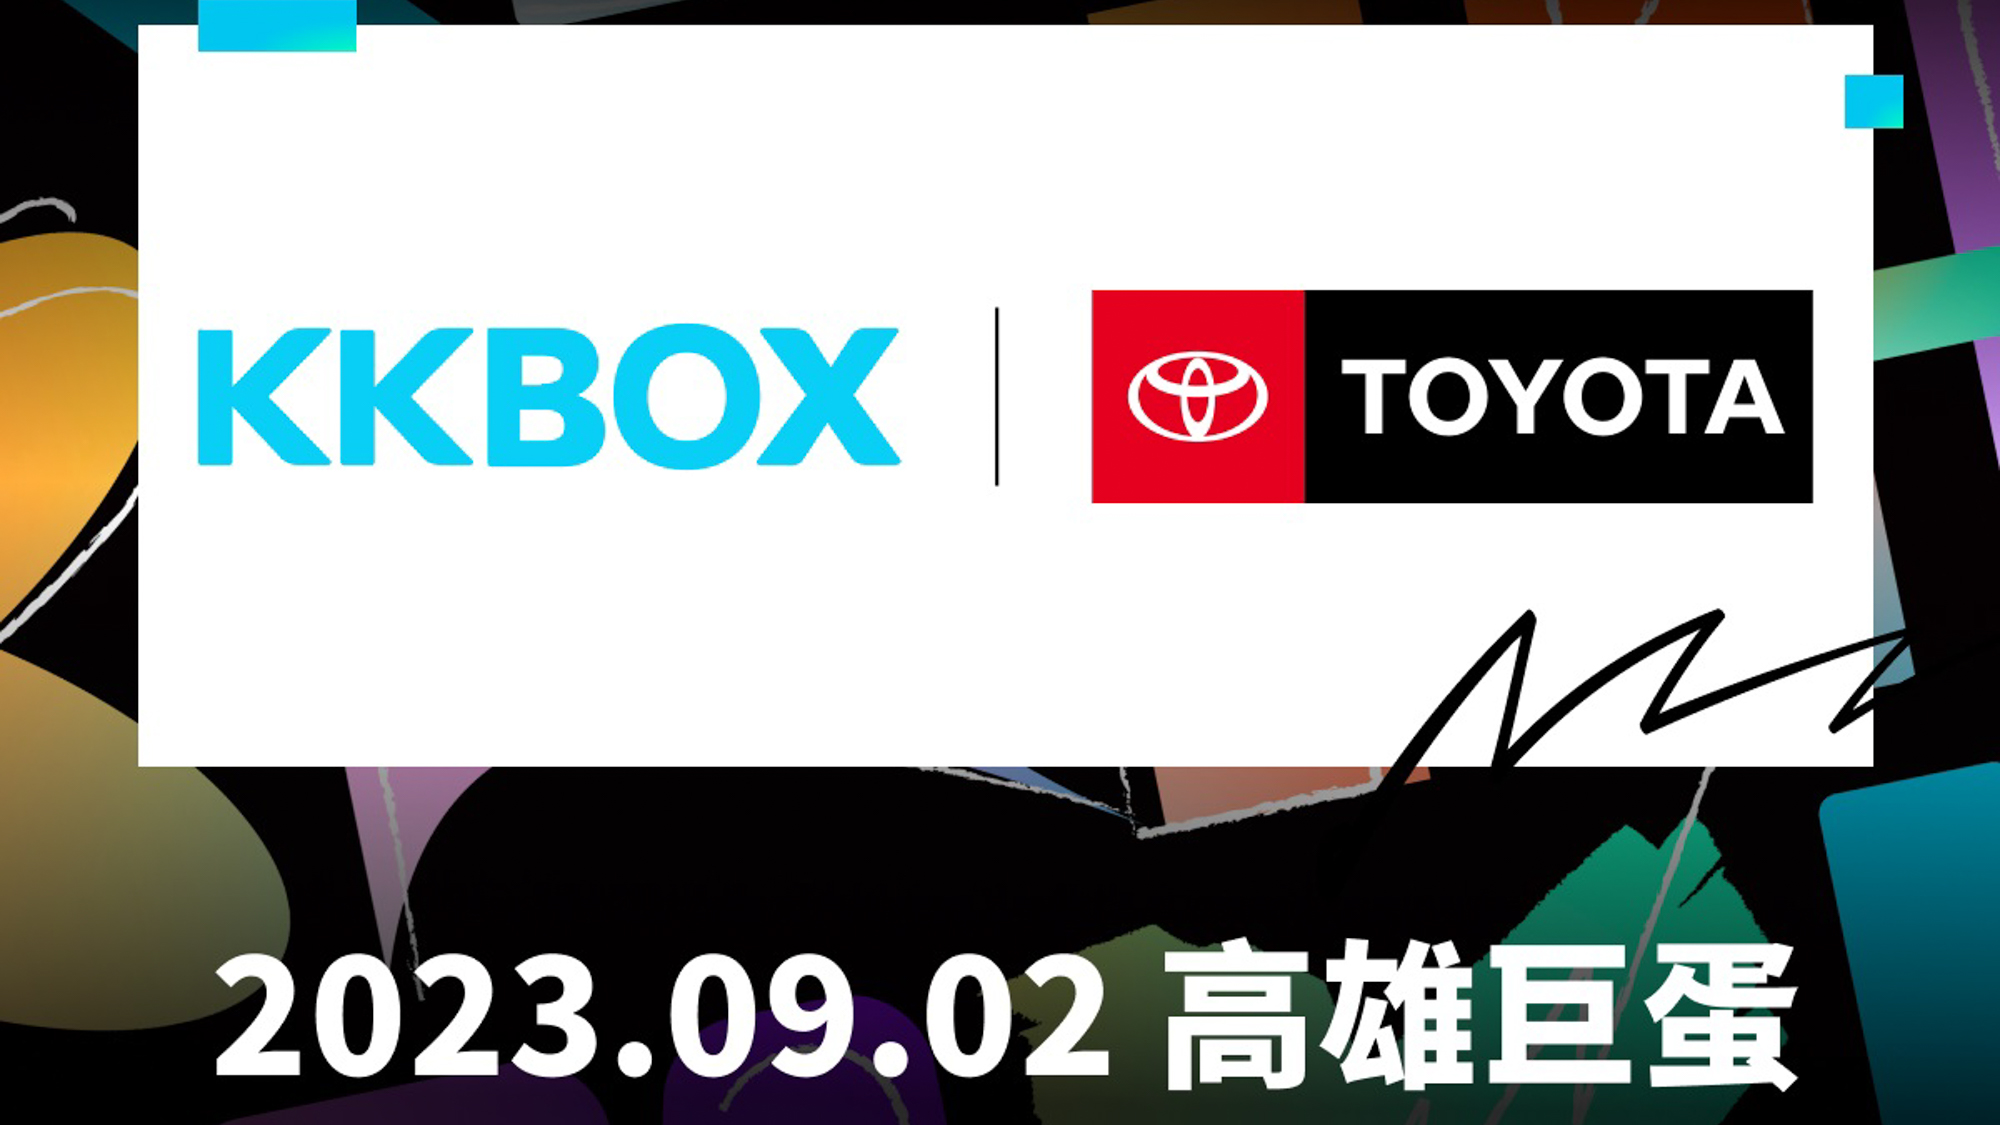 TOYOTA x KKBOX 風雲榜！支持台灣流行音樂，獻給樂迷們的成年禮！